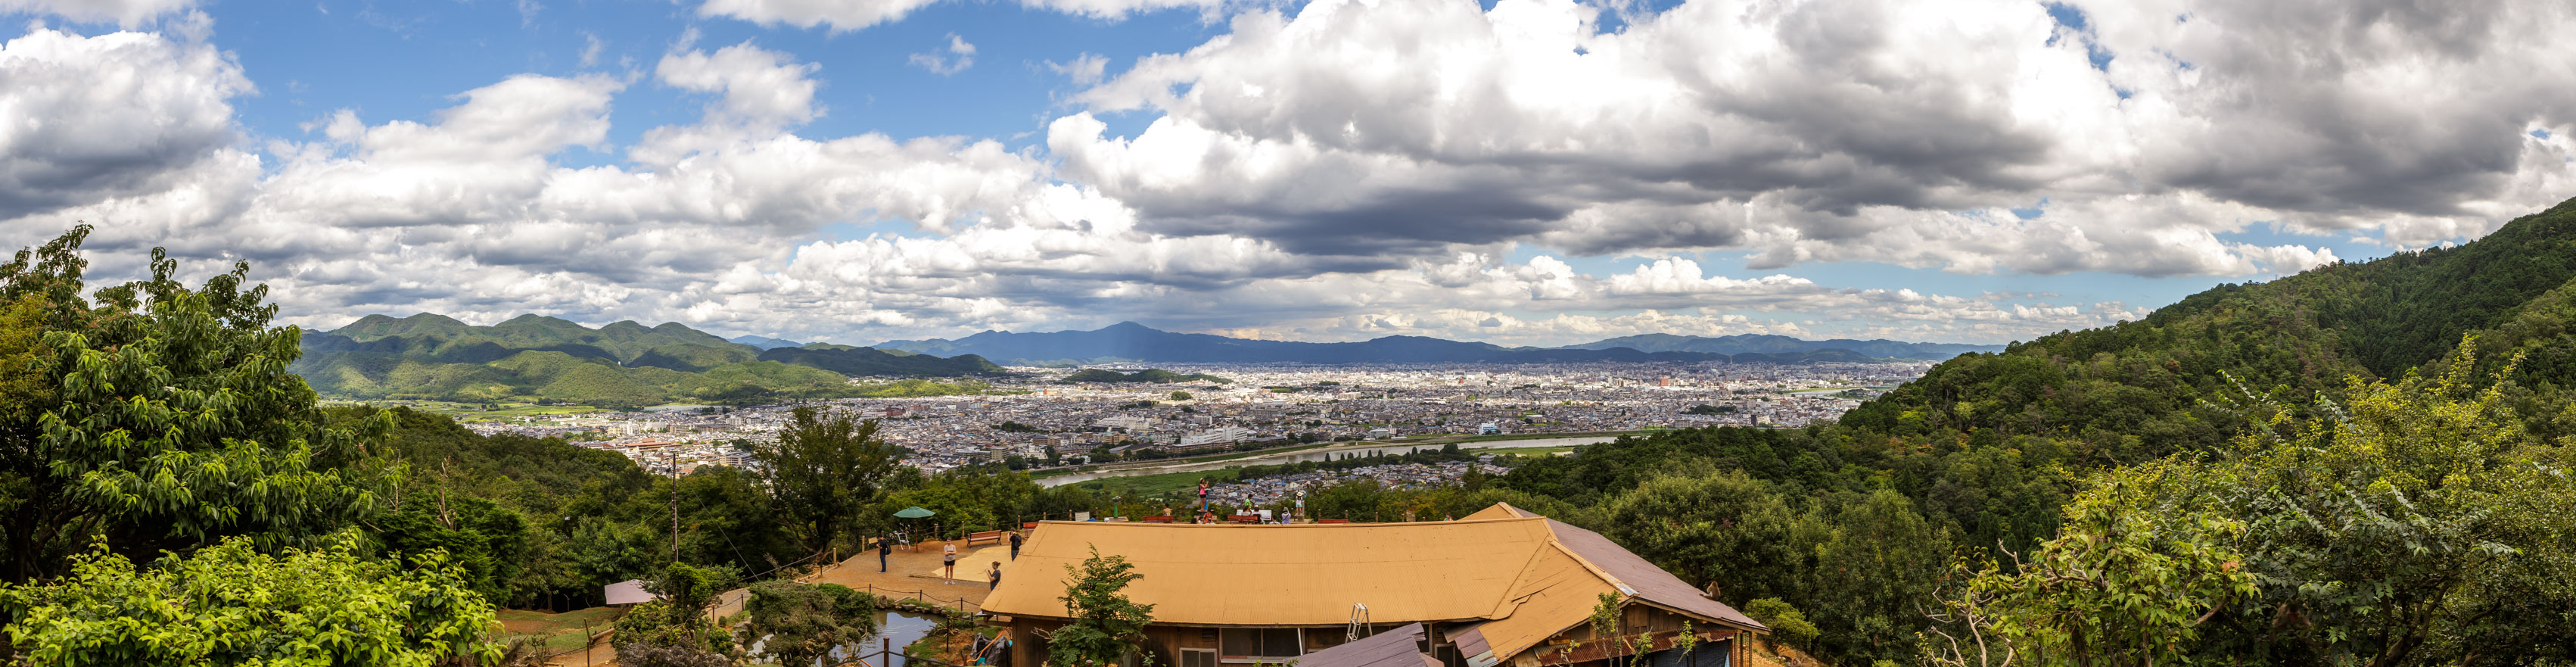 /Guewen/galeries/public/Voyages/Japon/kyoto/vista/Kyoto-vista_015.jpg